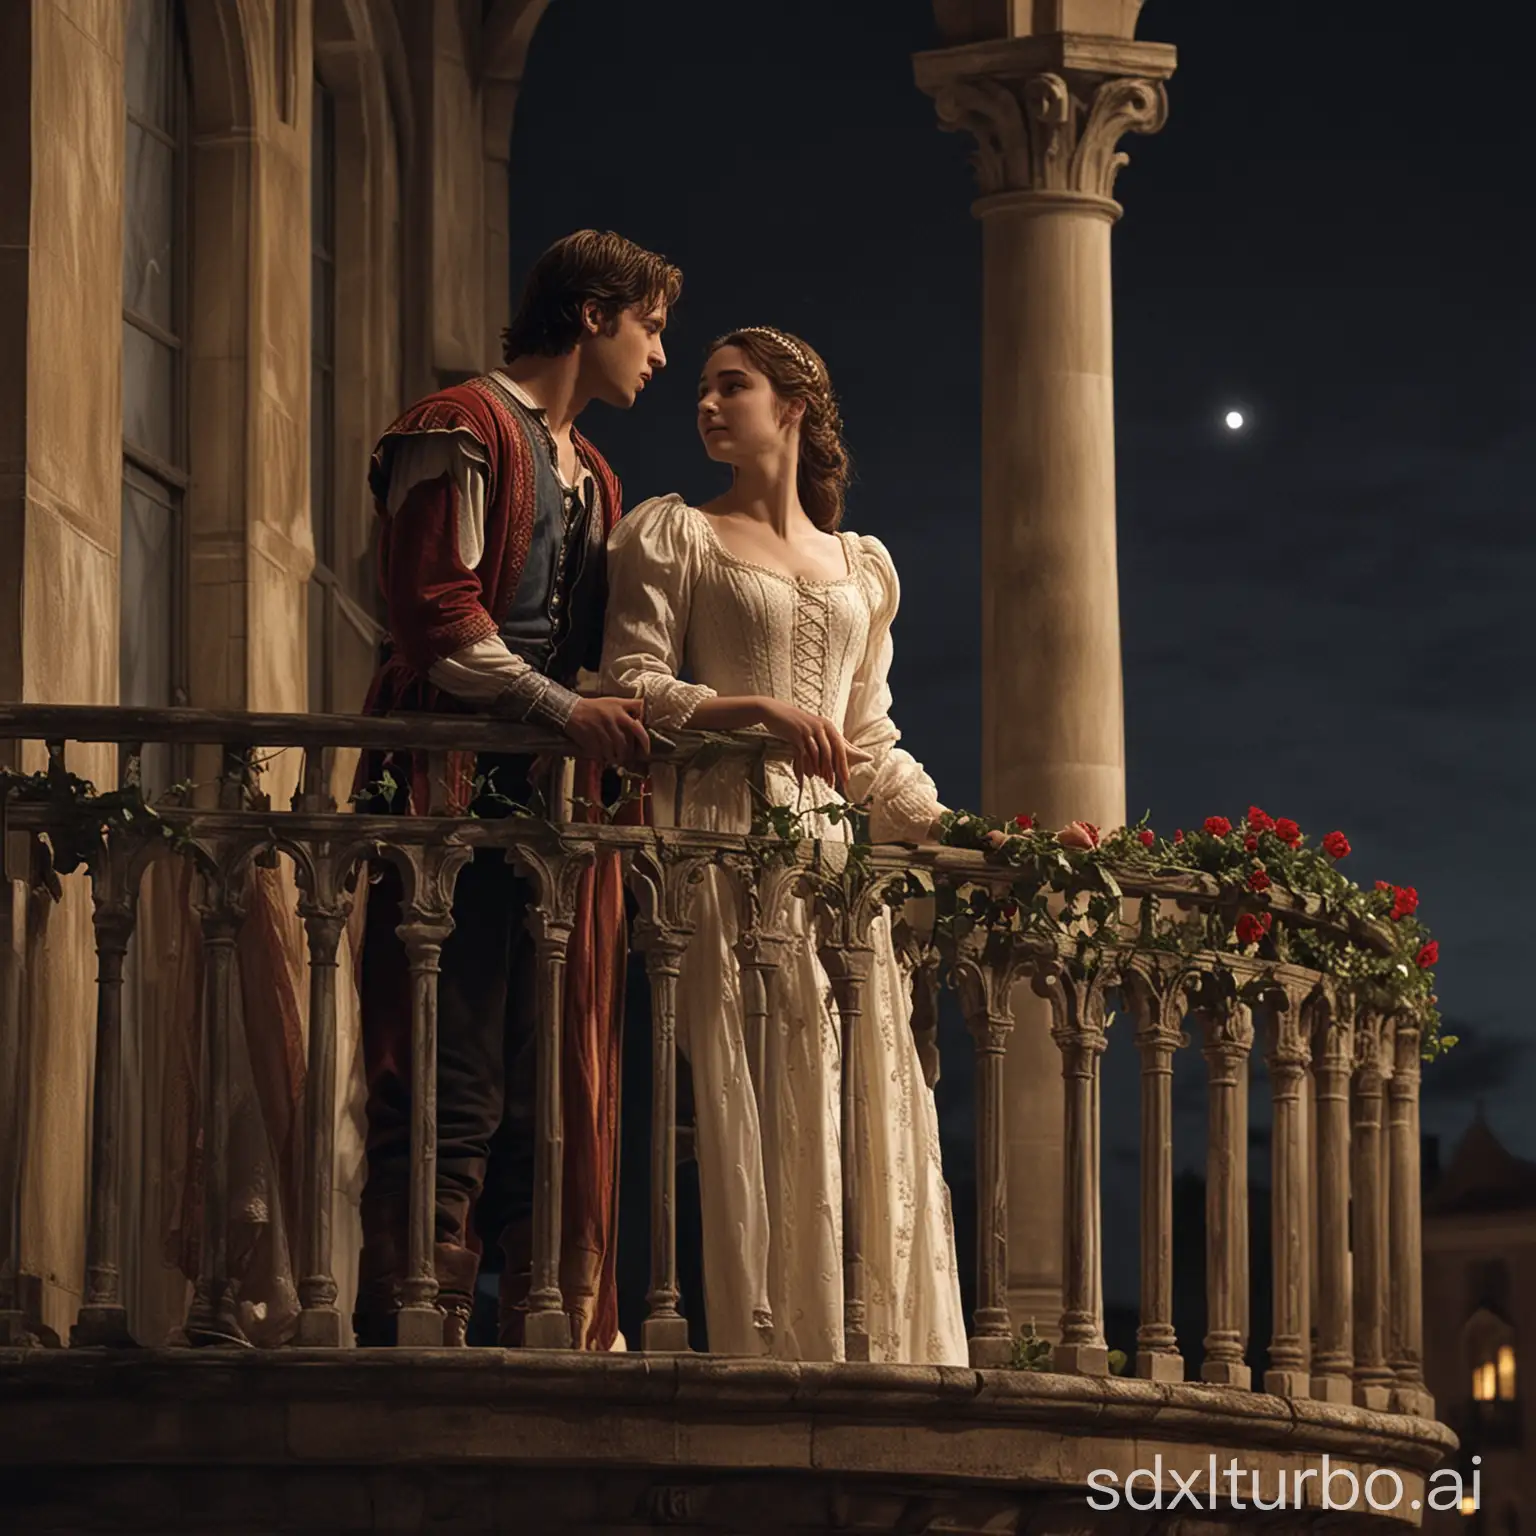 Romantic-Serenade-Romeo-Calls-Juliet-from-Balcony-at-Night